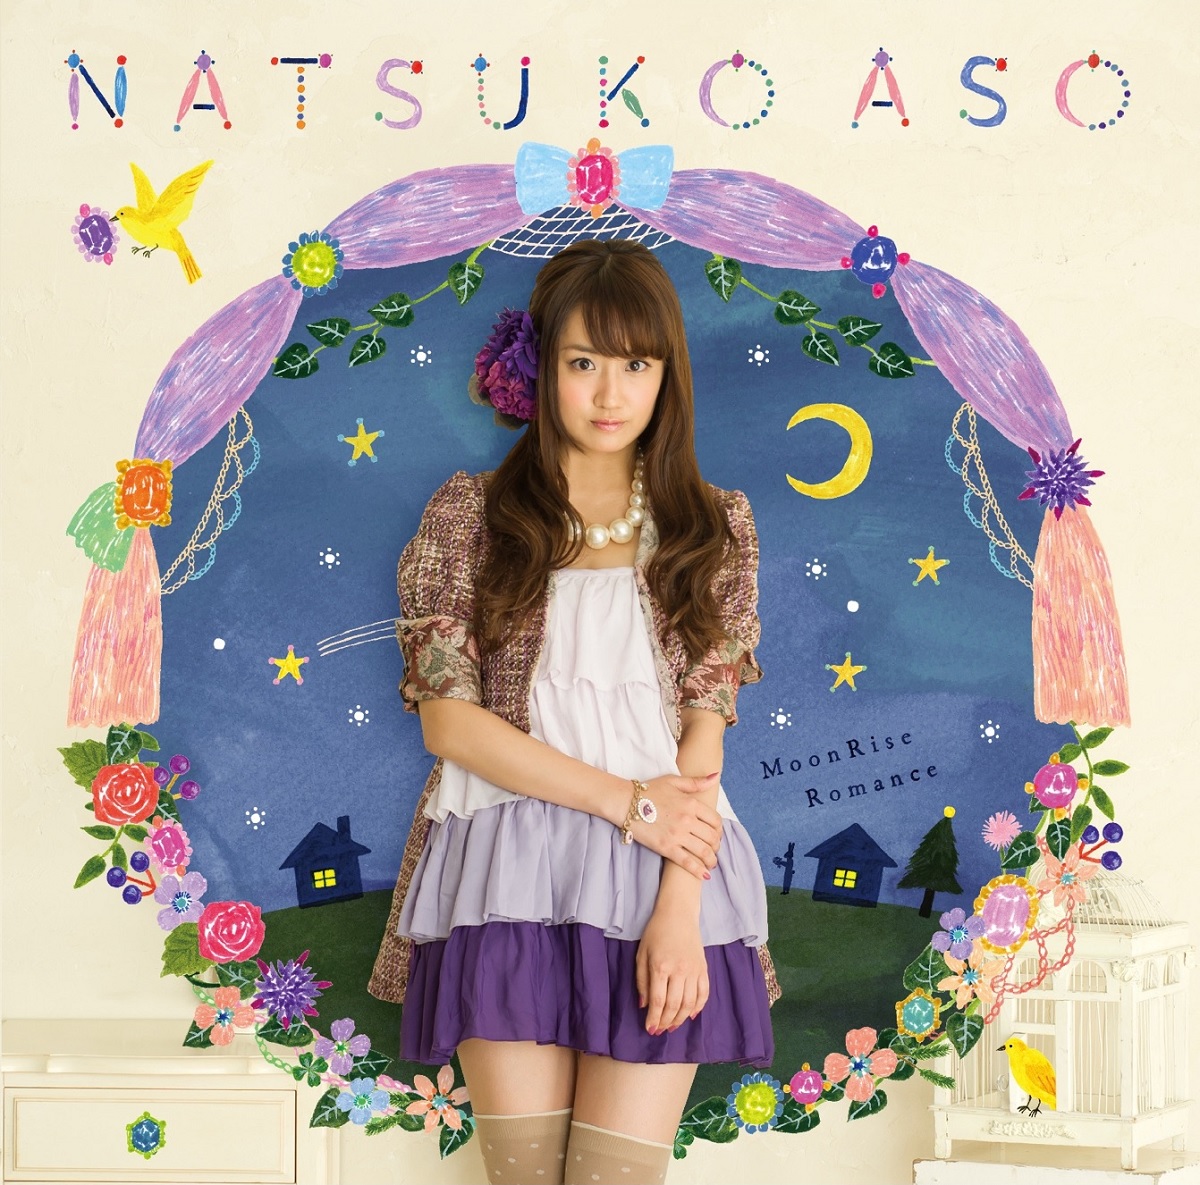 Cover art for『Natsuko Aso - MoonRise Romance』from the release『MoonRise Romance